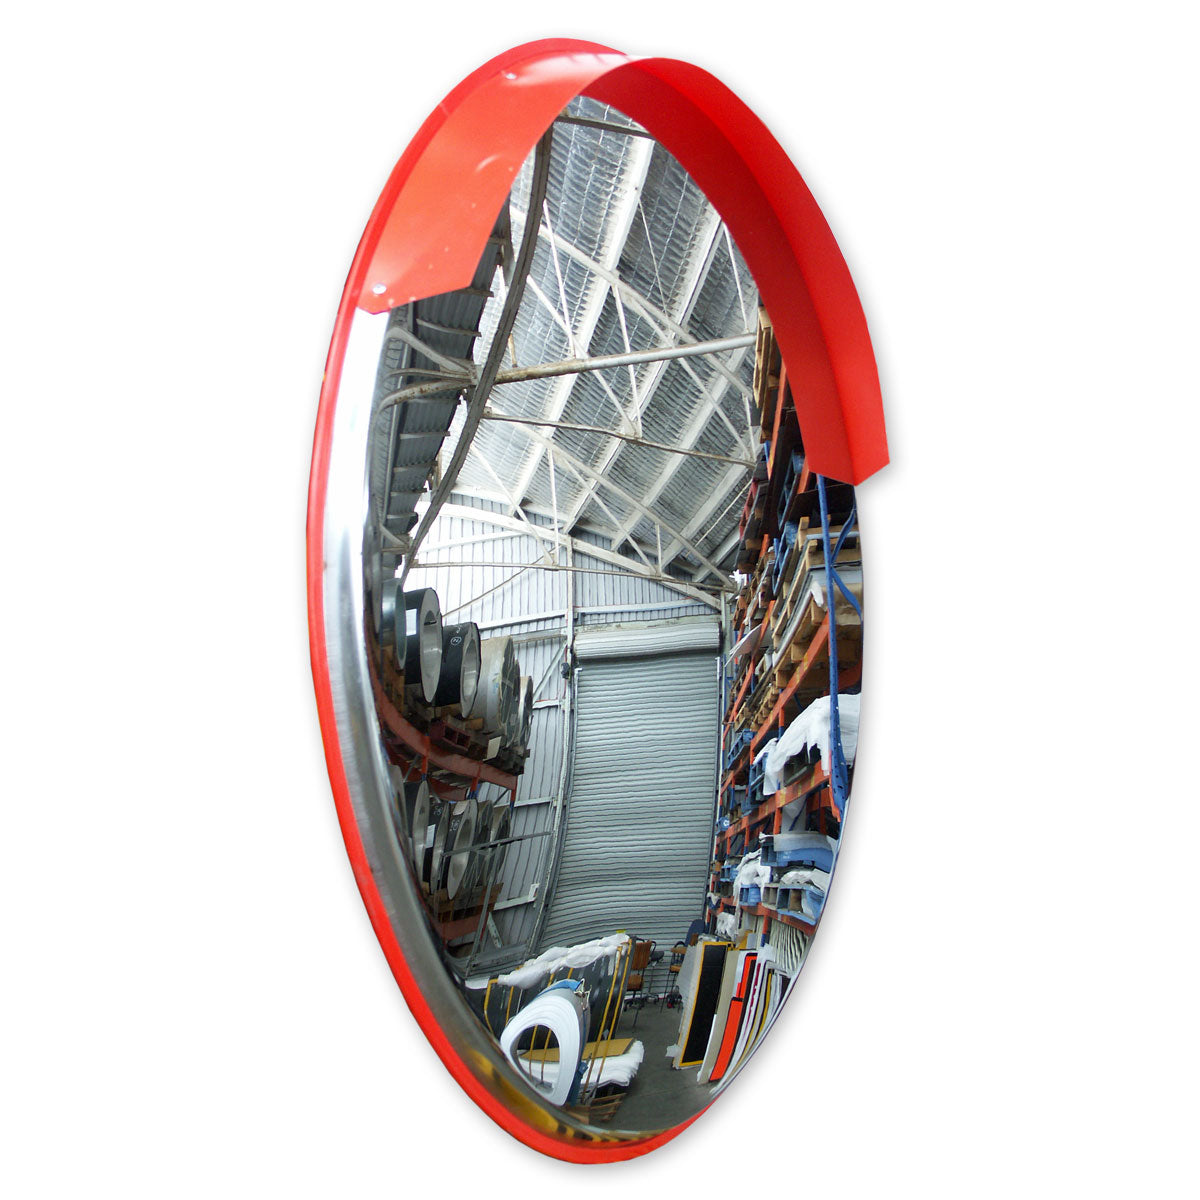 Safety Convex Mirror - External Grade